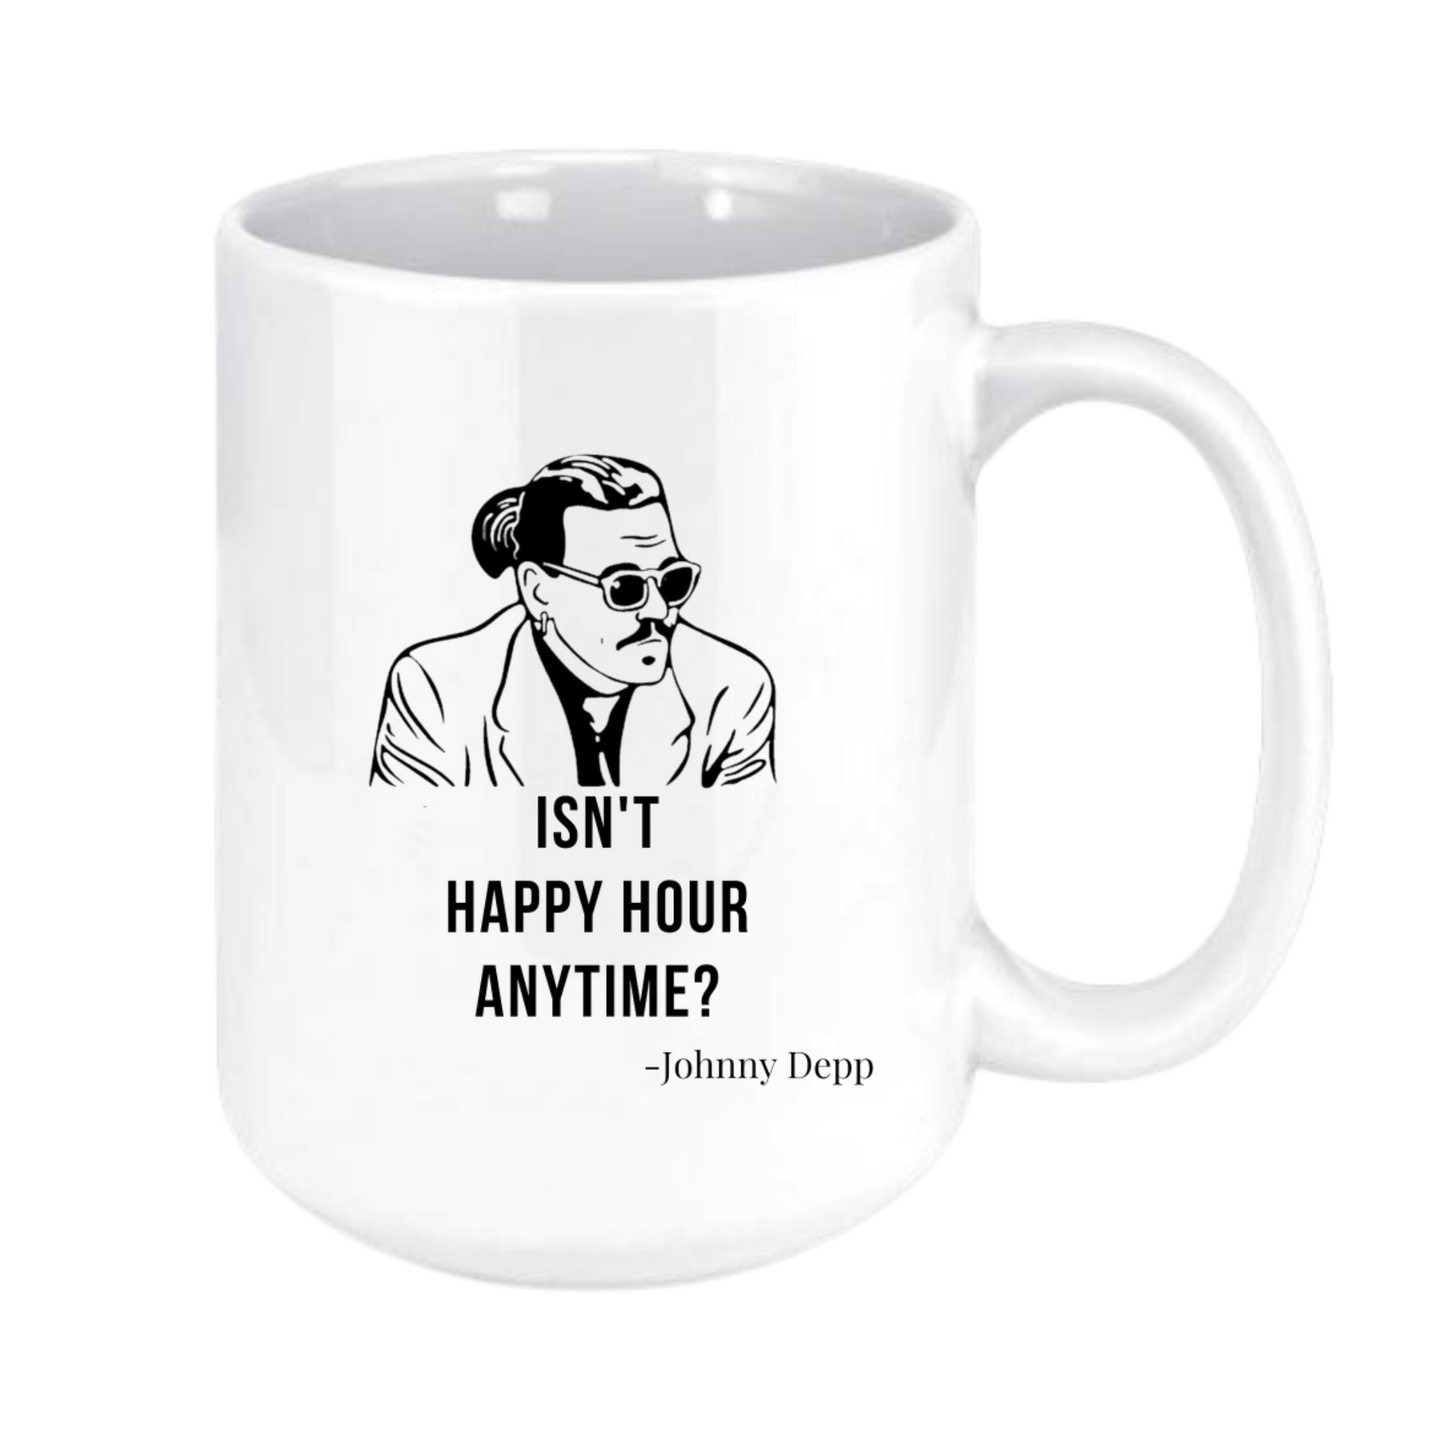 Isn't happy hour anytime? mug